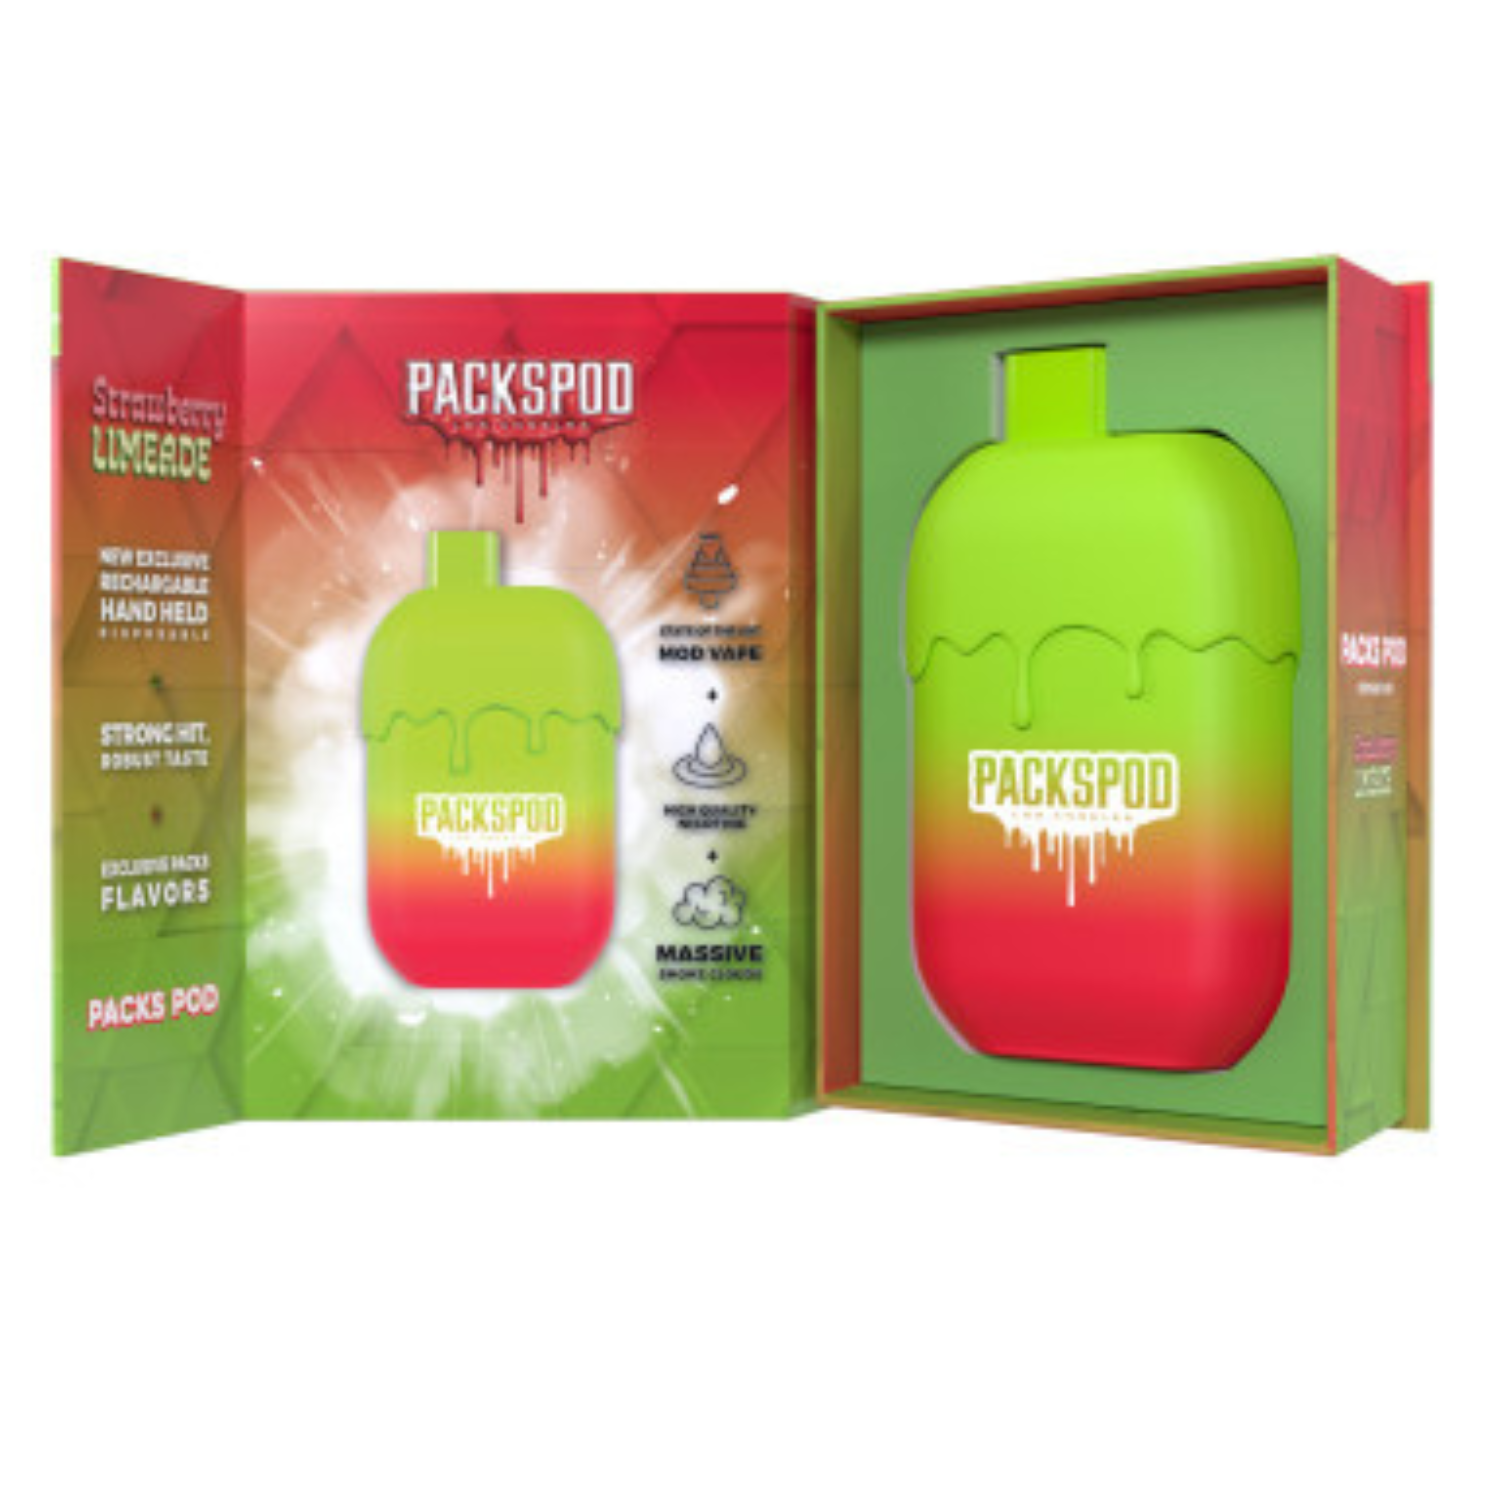 Packwoods Packspod 5000 Puff Disposable Vape